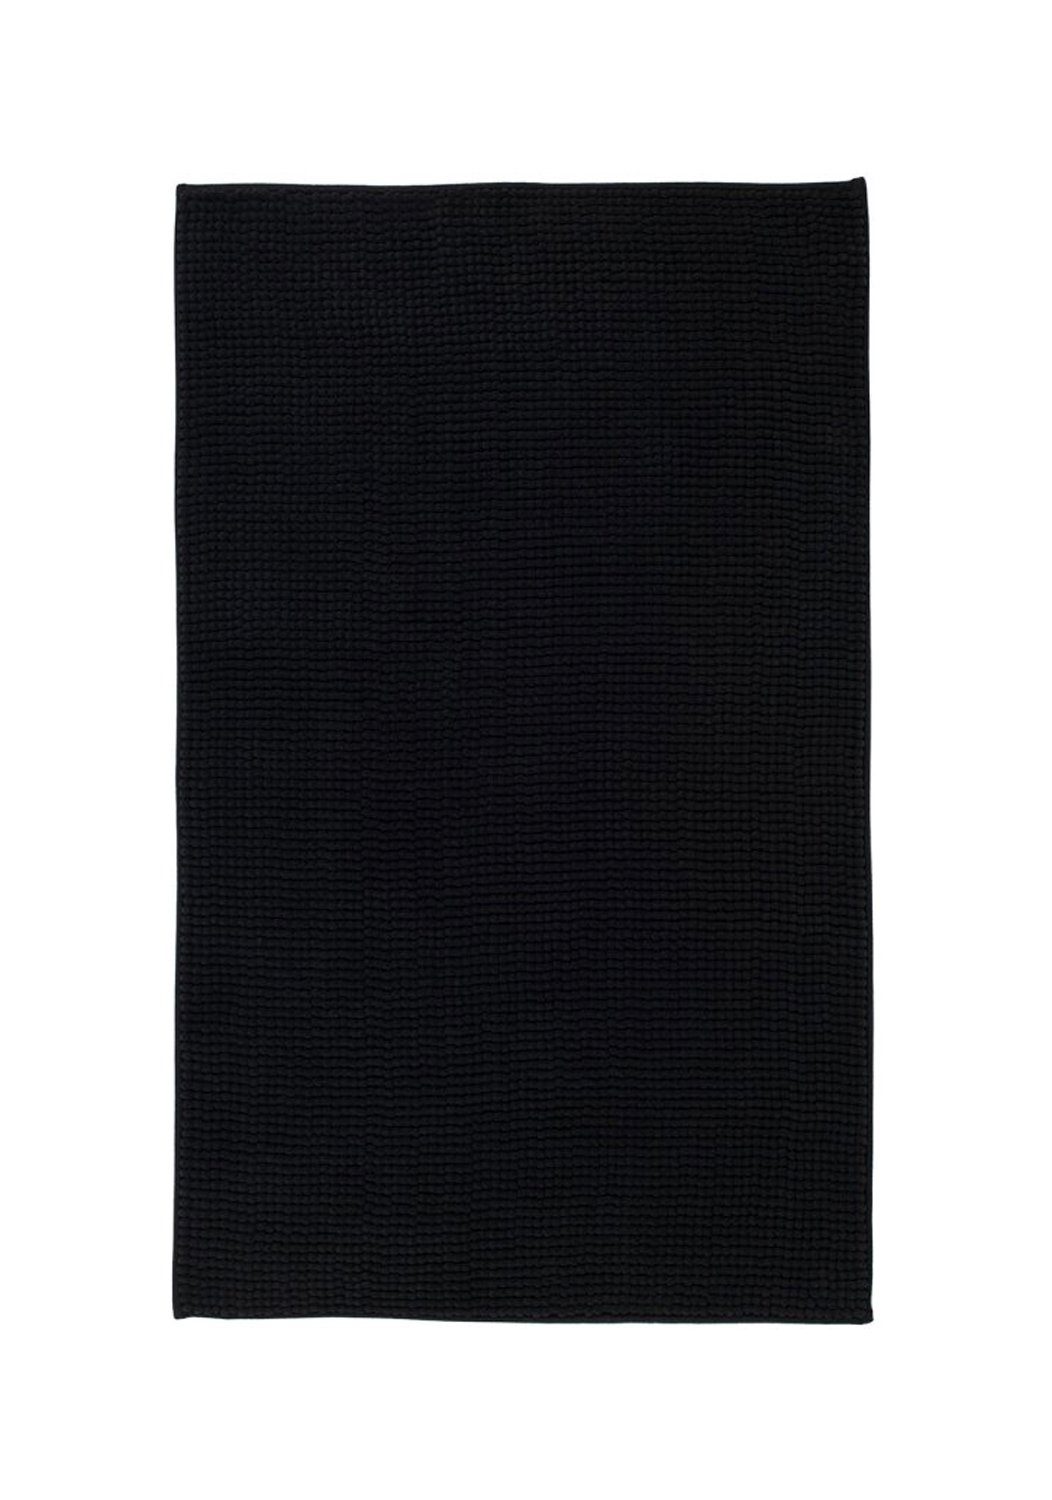 Badematte CHENILLE, Graphitfarben, 70 x 50 cm, Uni, Höhe 15.0 mm, rutschhemmend beschichtet, fußbodenheizungsgeeignet, Polyester, rechteckig